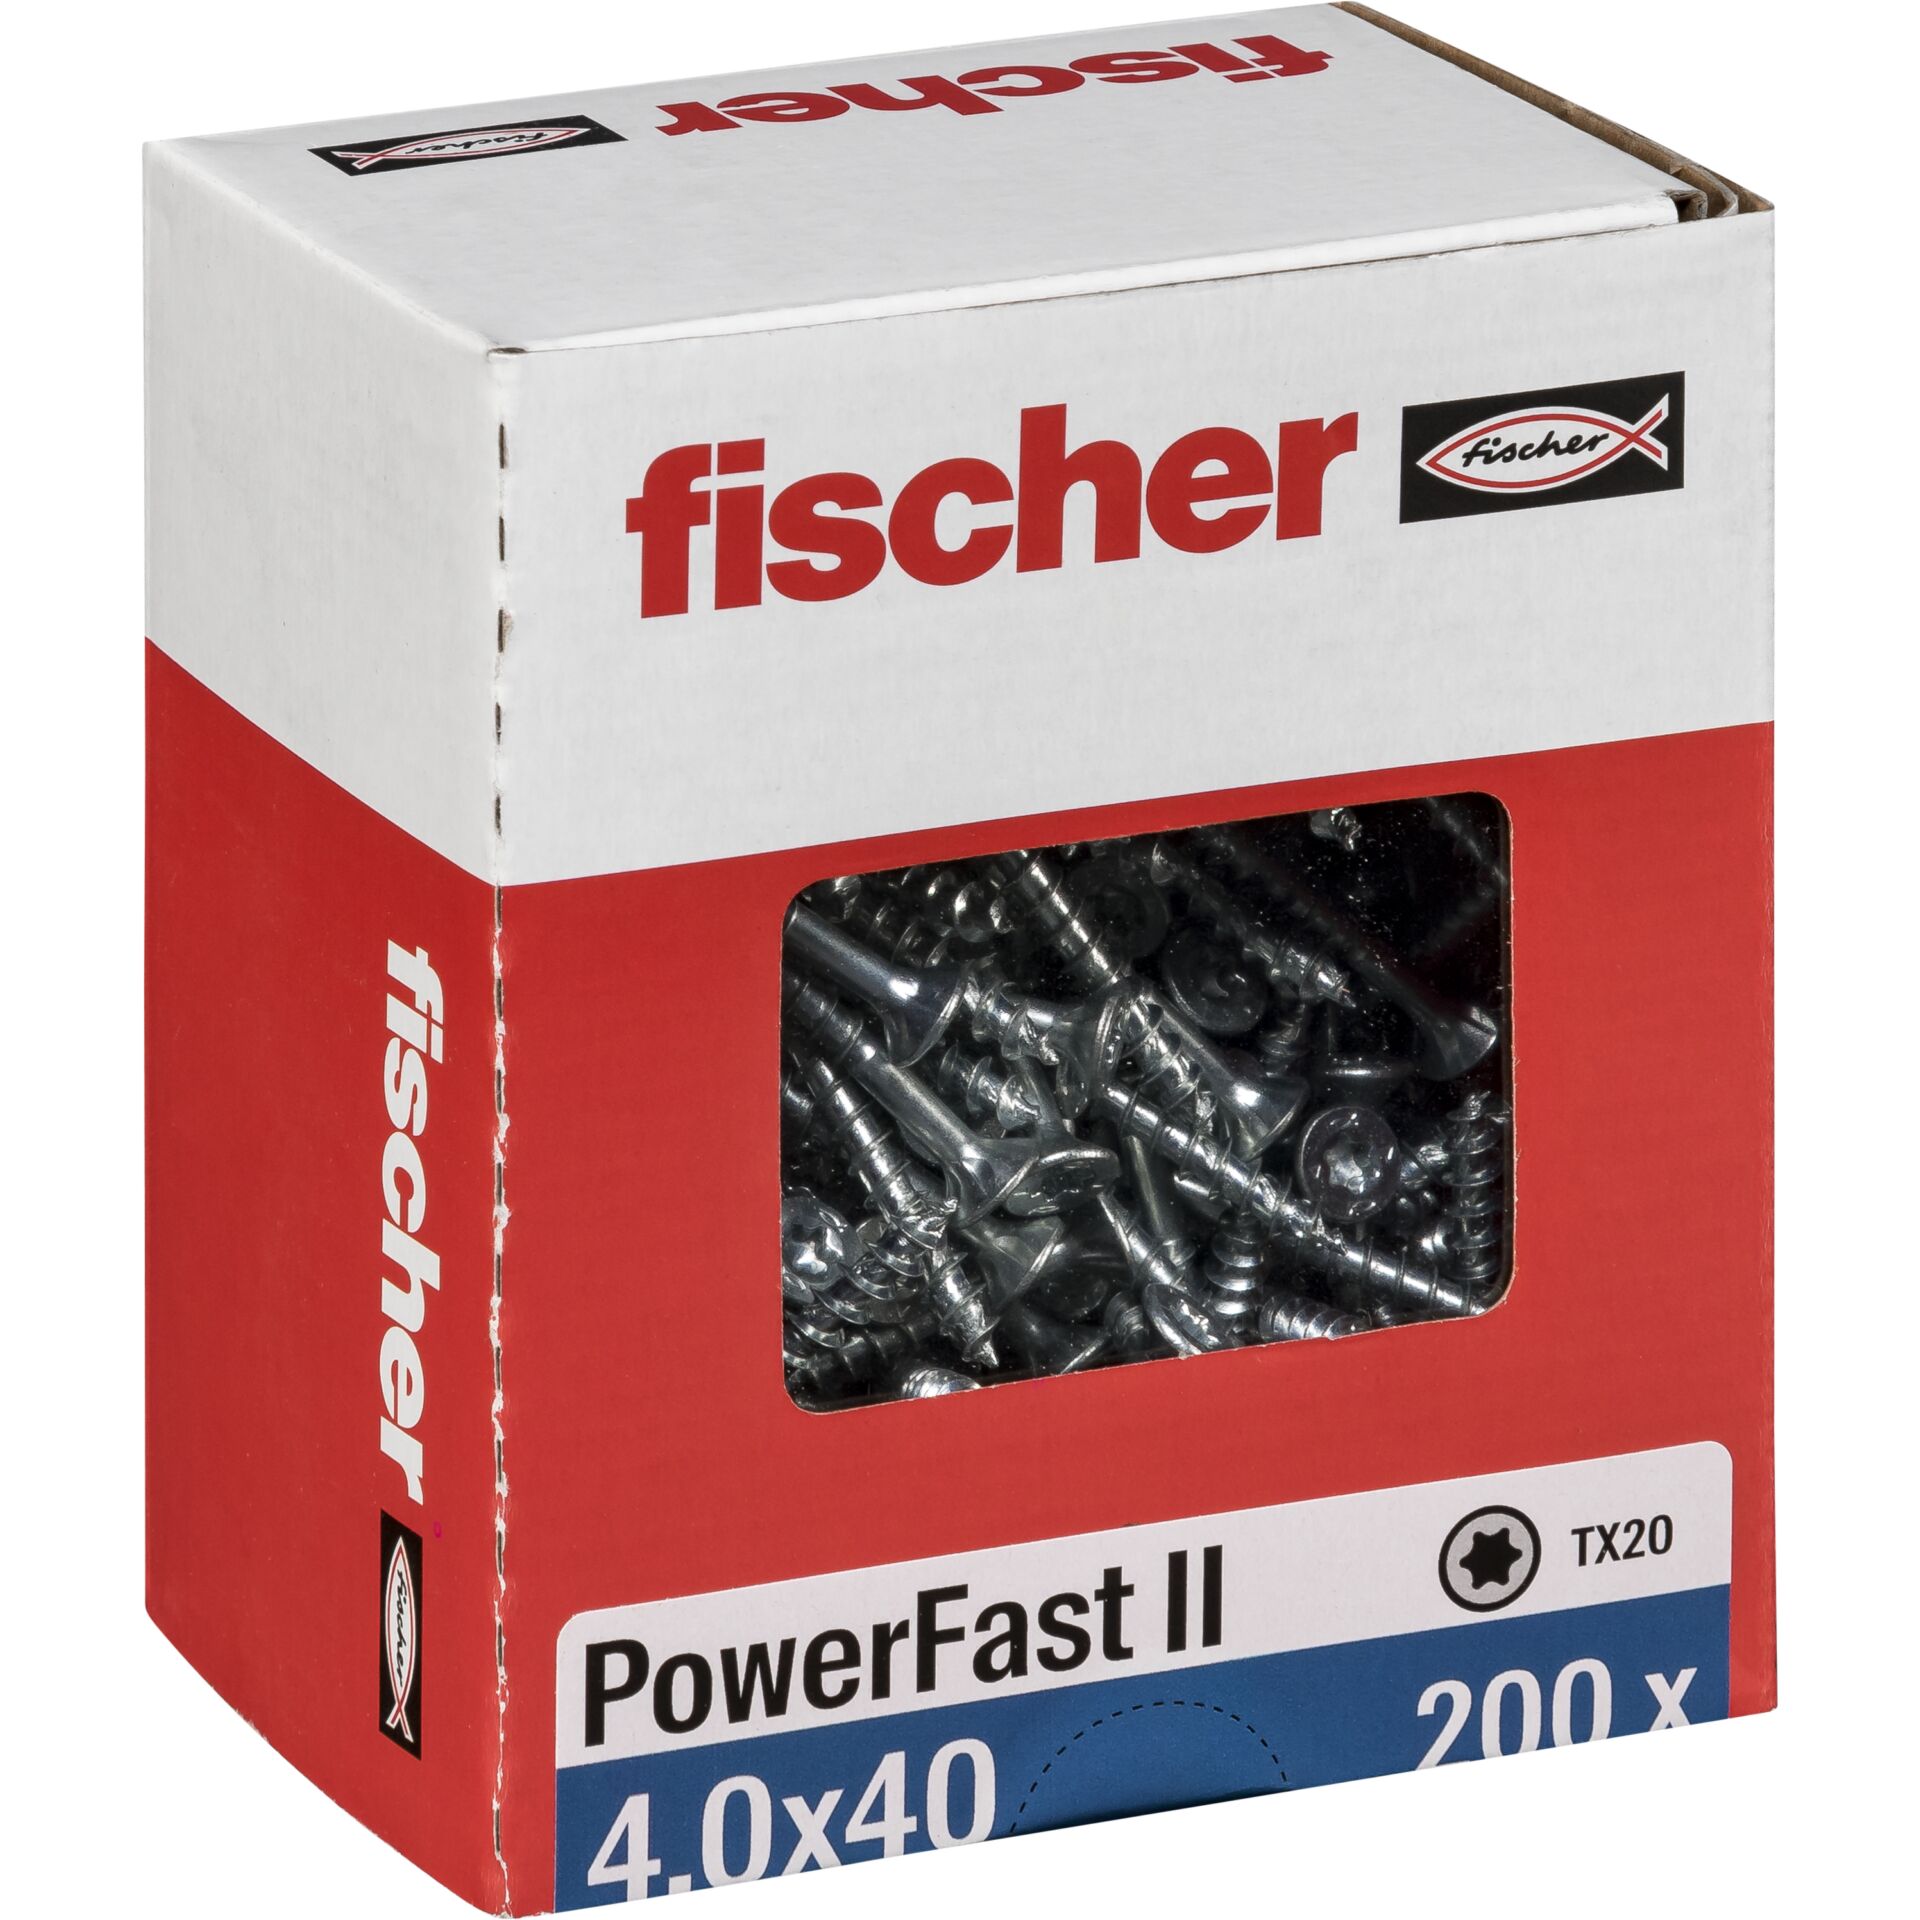 Fischer PowerFast II 4,0x40 SK TX TG blvz 200